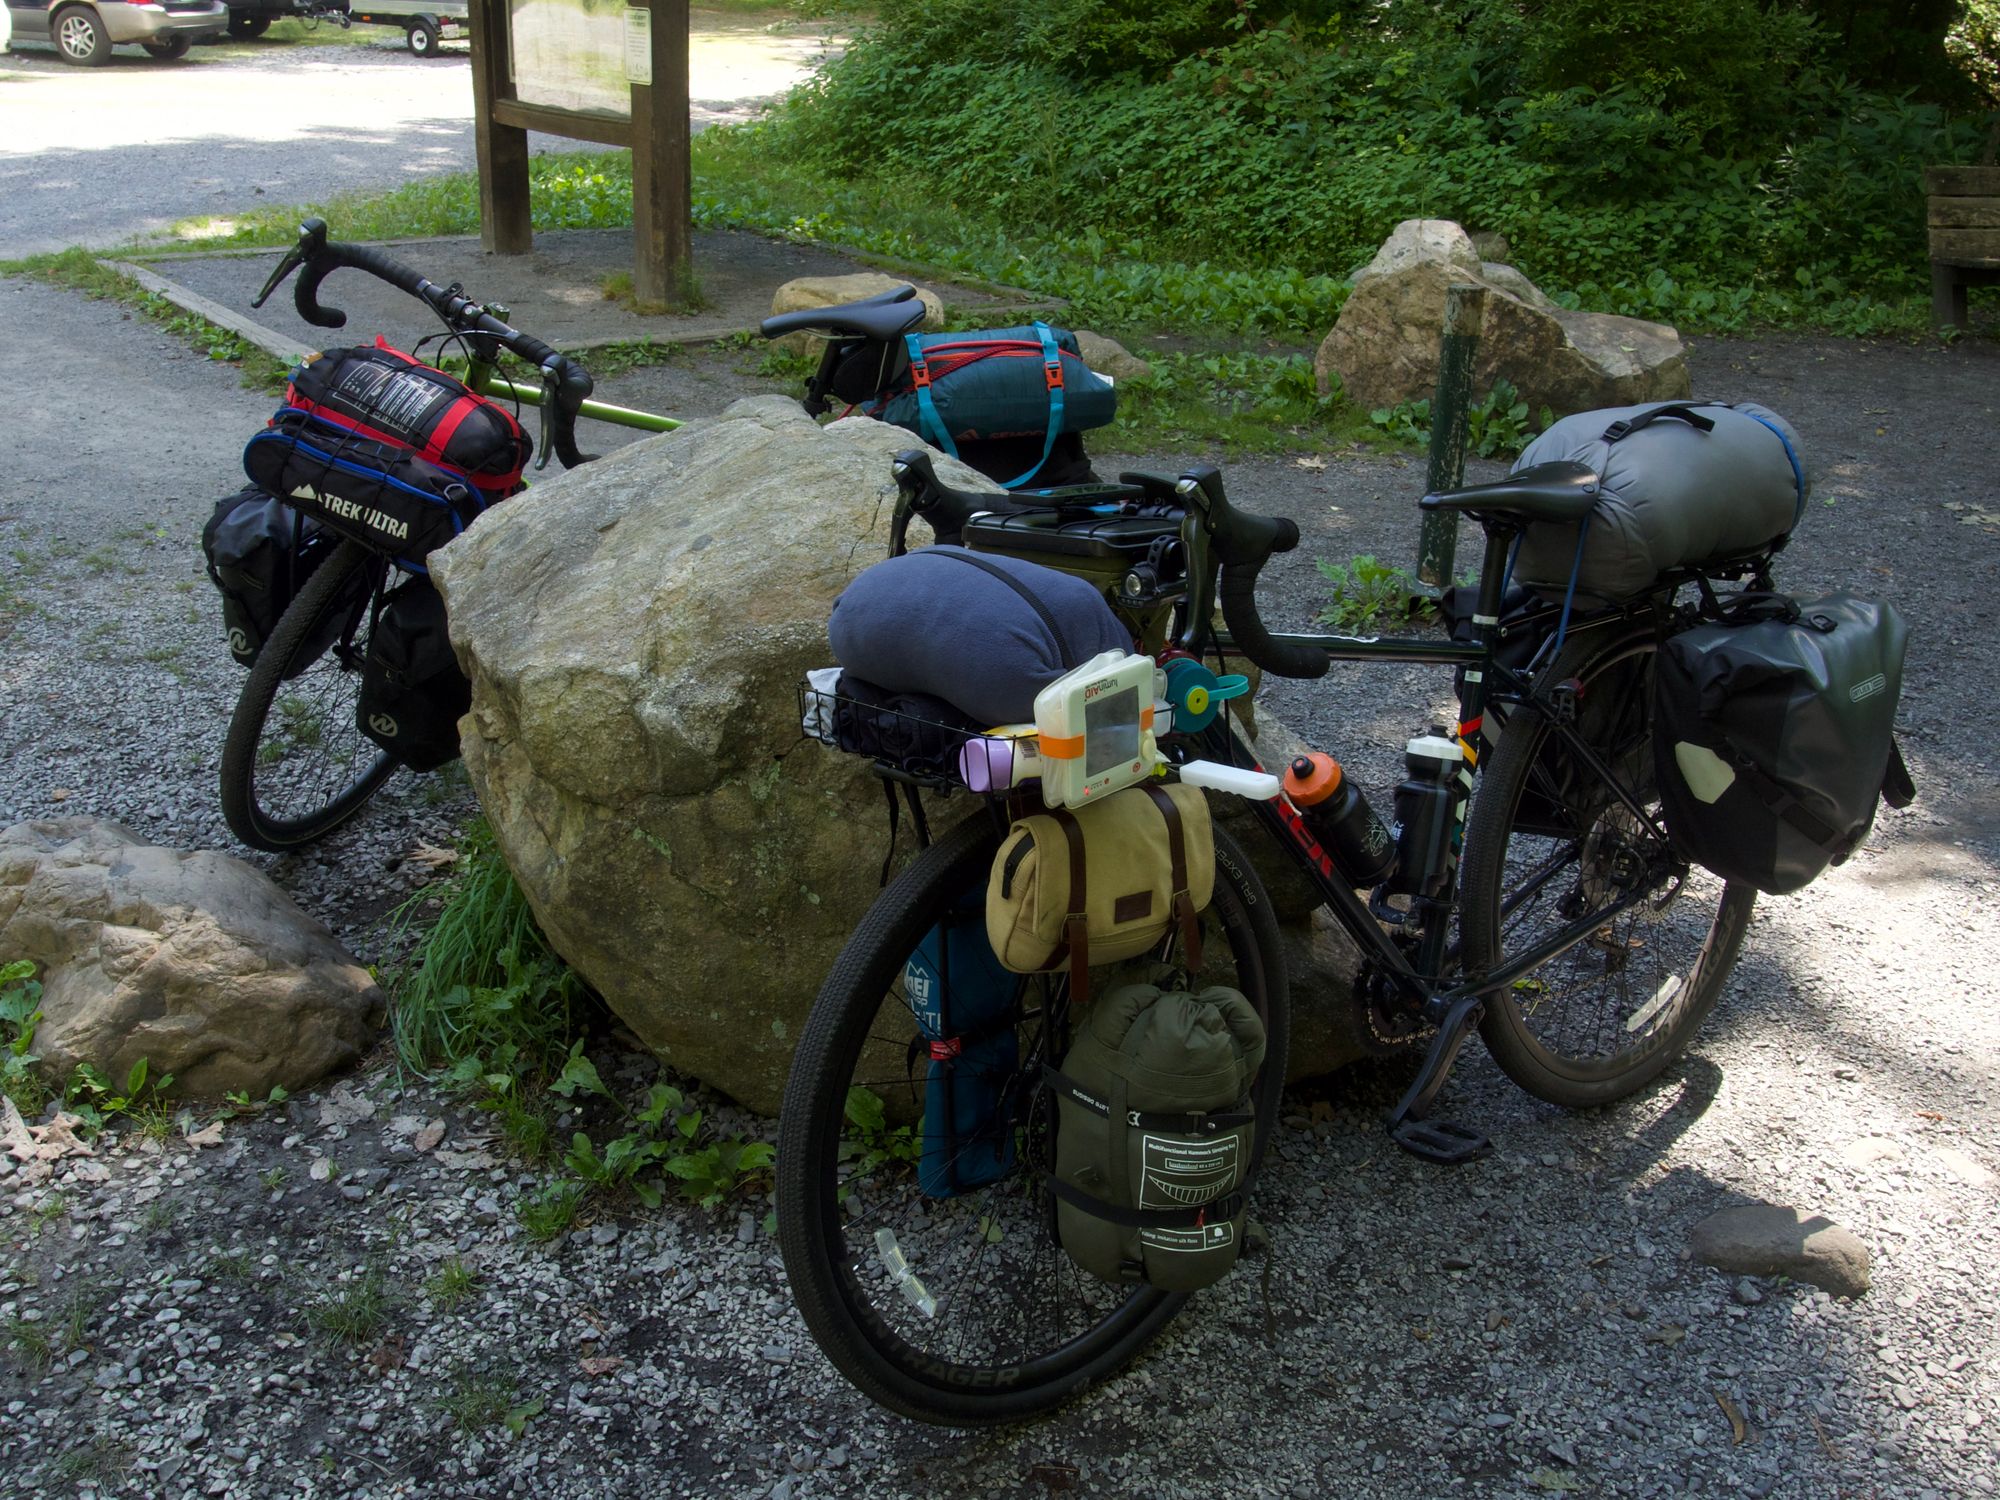 Bike camping the Virginia Creeper Trail